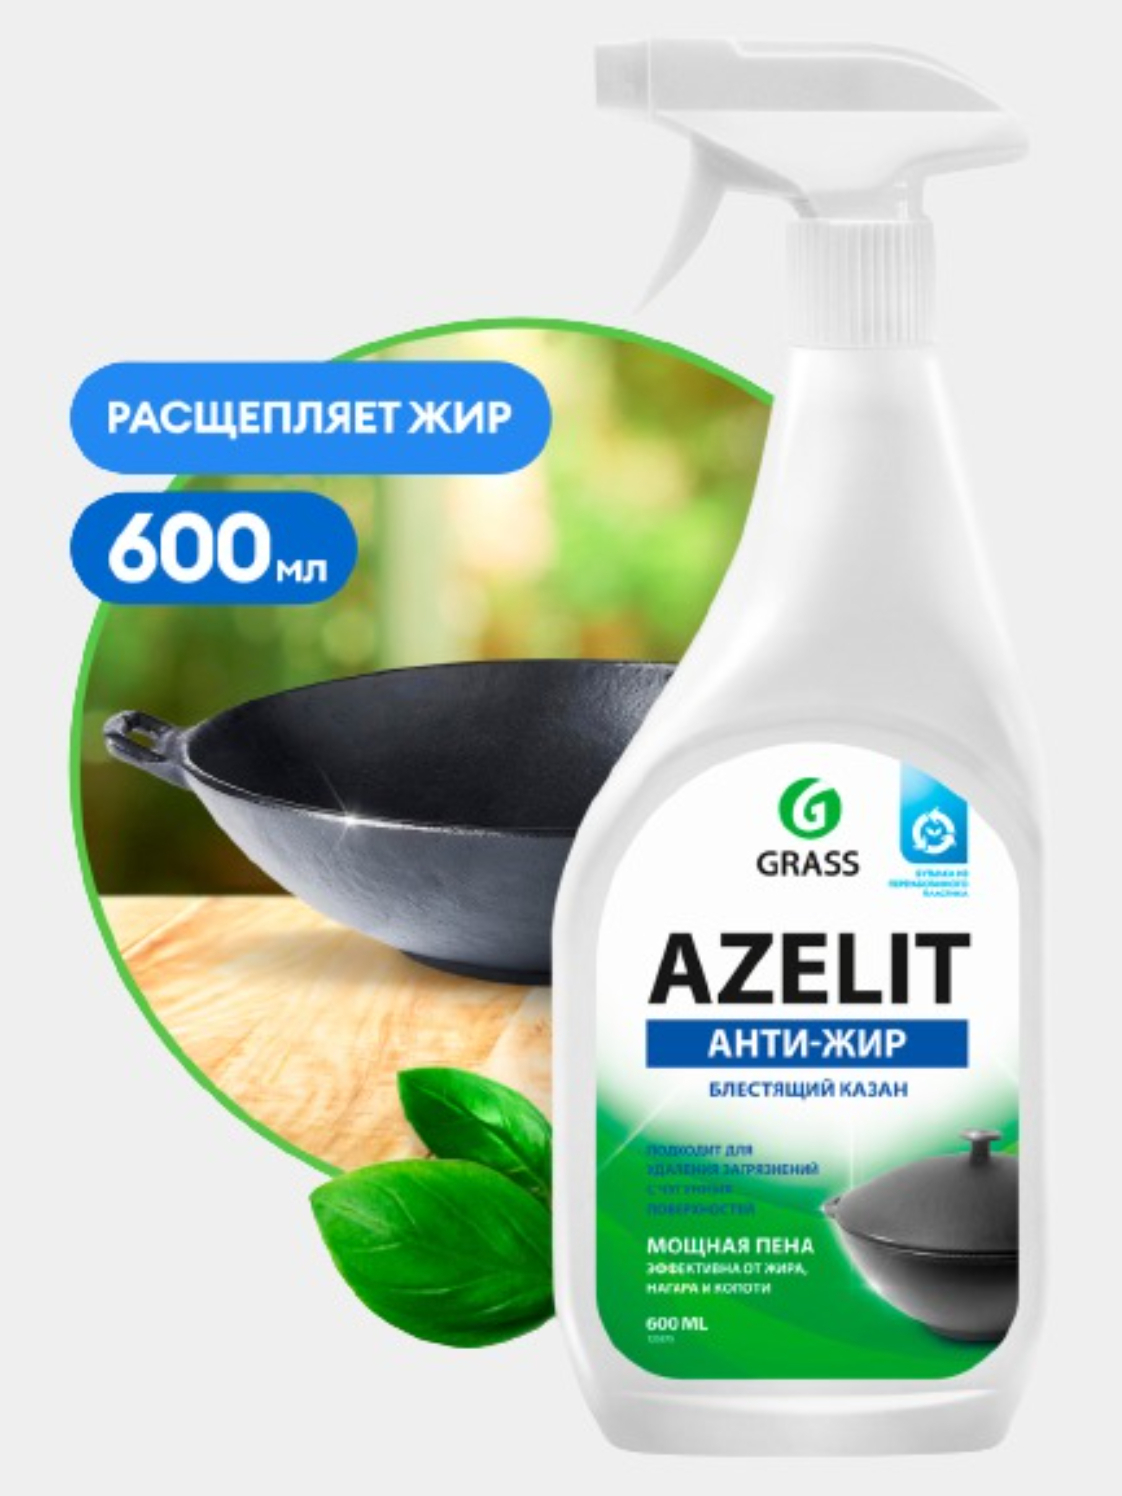 GRASS АНТИЖИР  Azelit КАЗАН для кухни бытовая химия анти жир 600 .